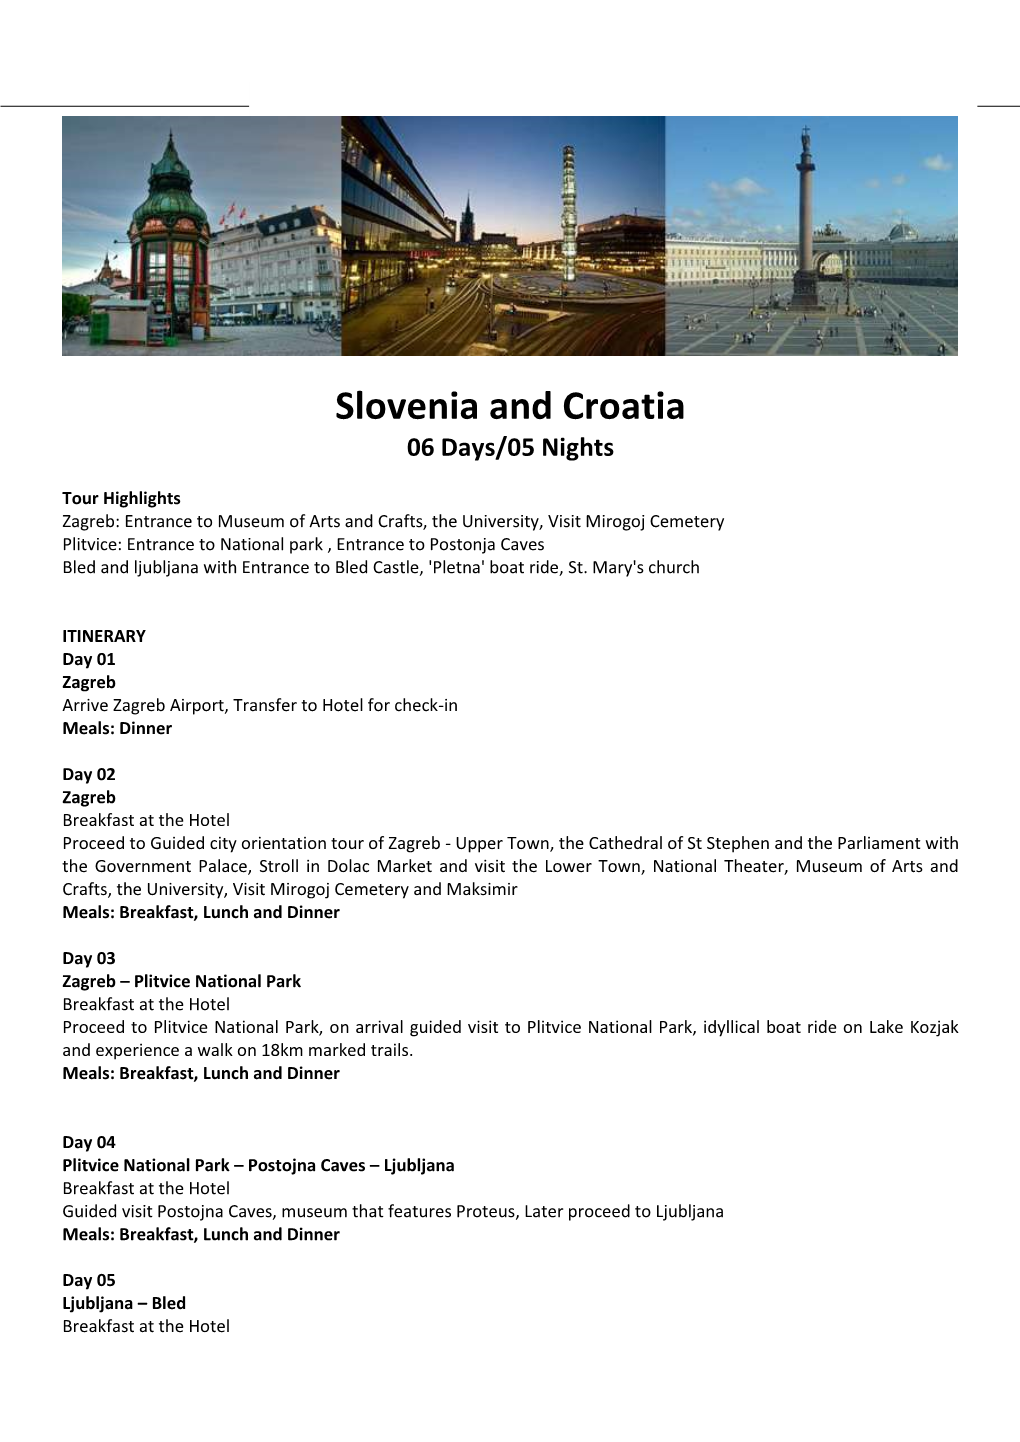 Slovenia and Croatia 06 Days/05 Nights